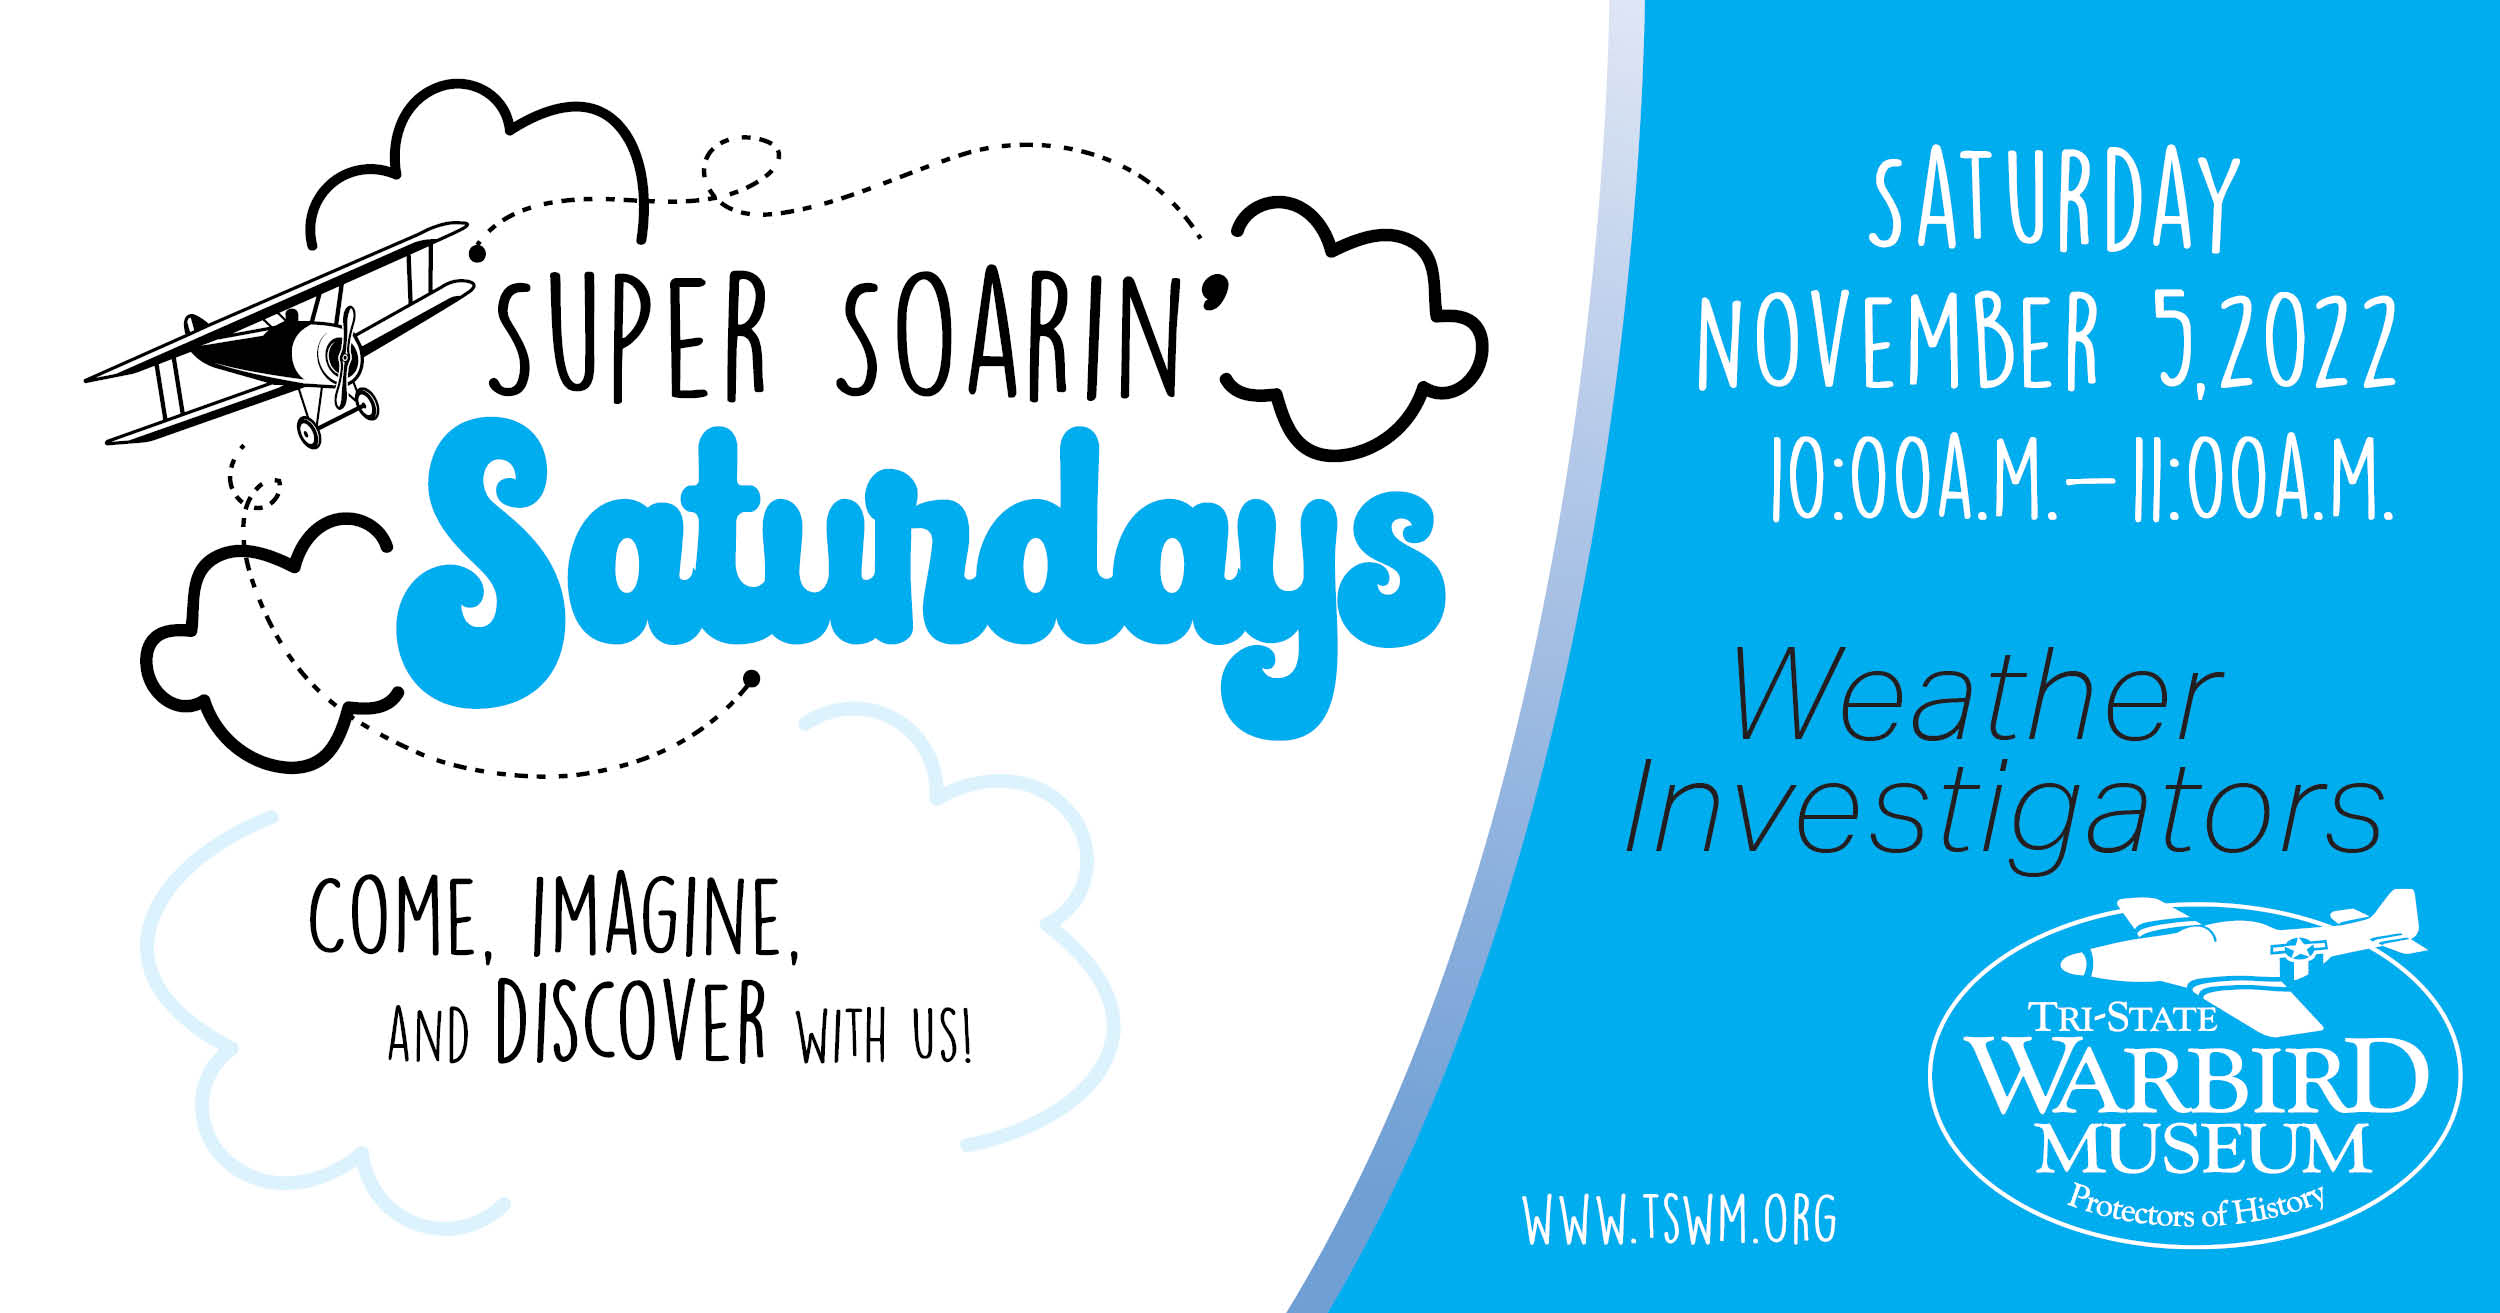 Super Soarin Saturdays November 5 2022 weather investigators edit 8.31.22